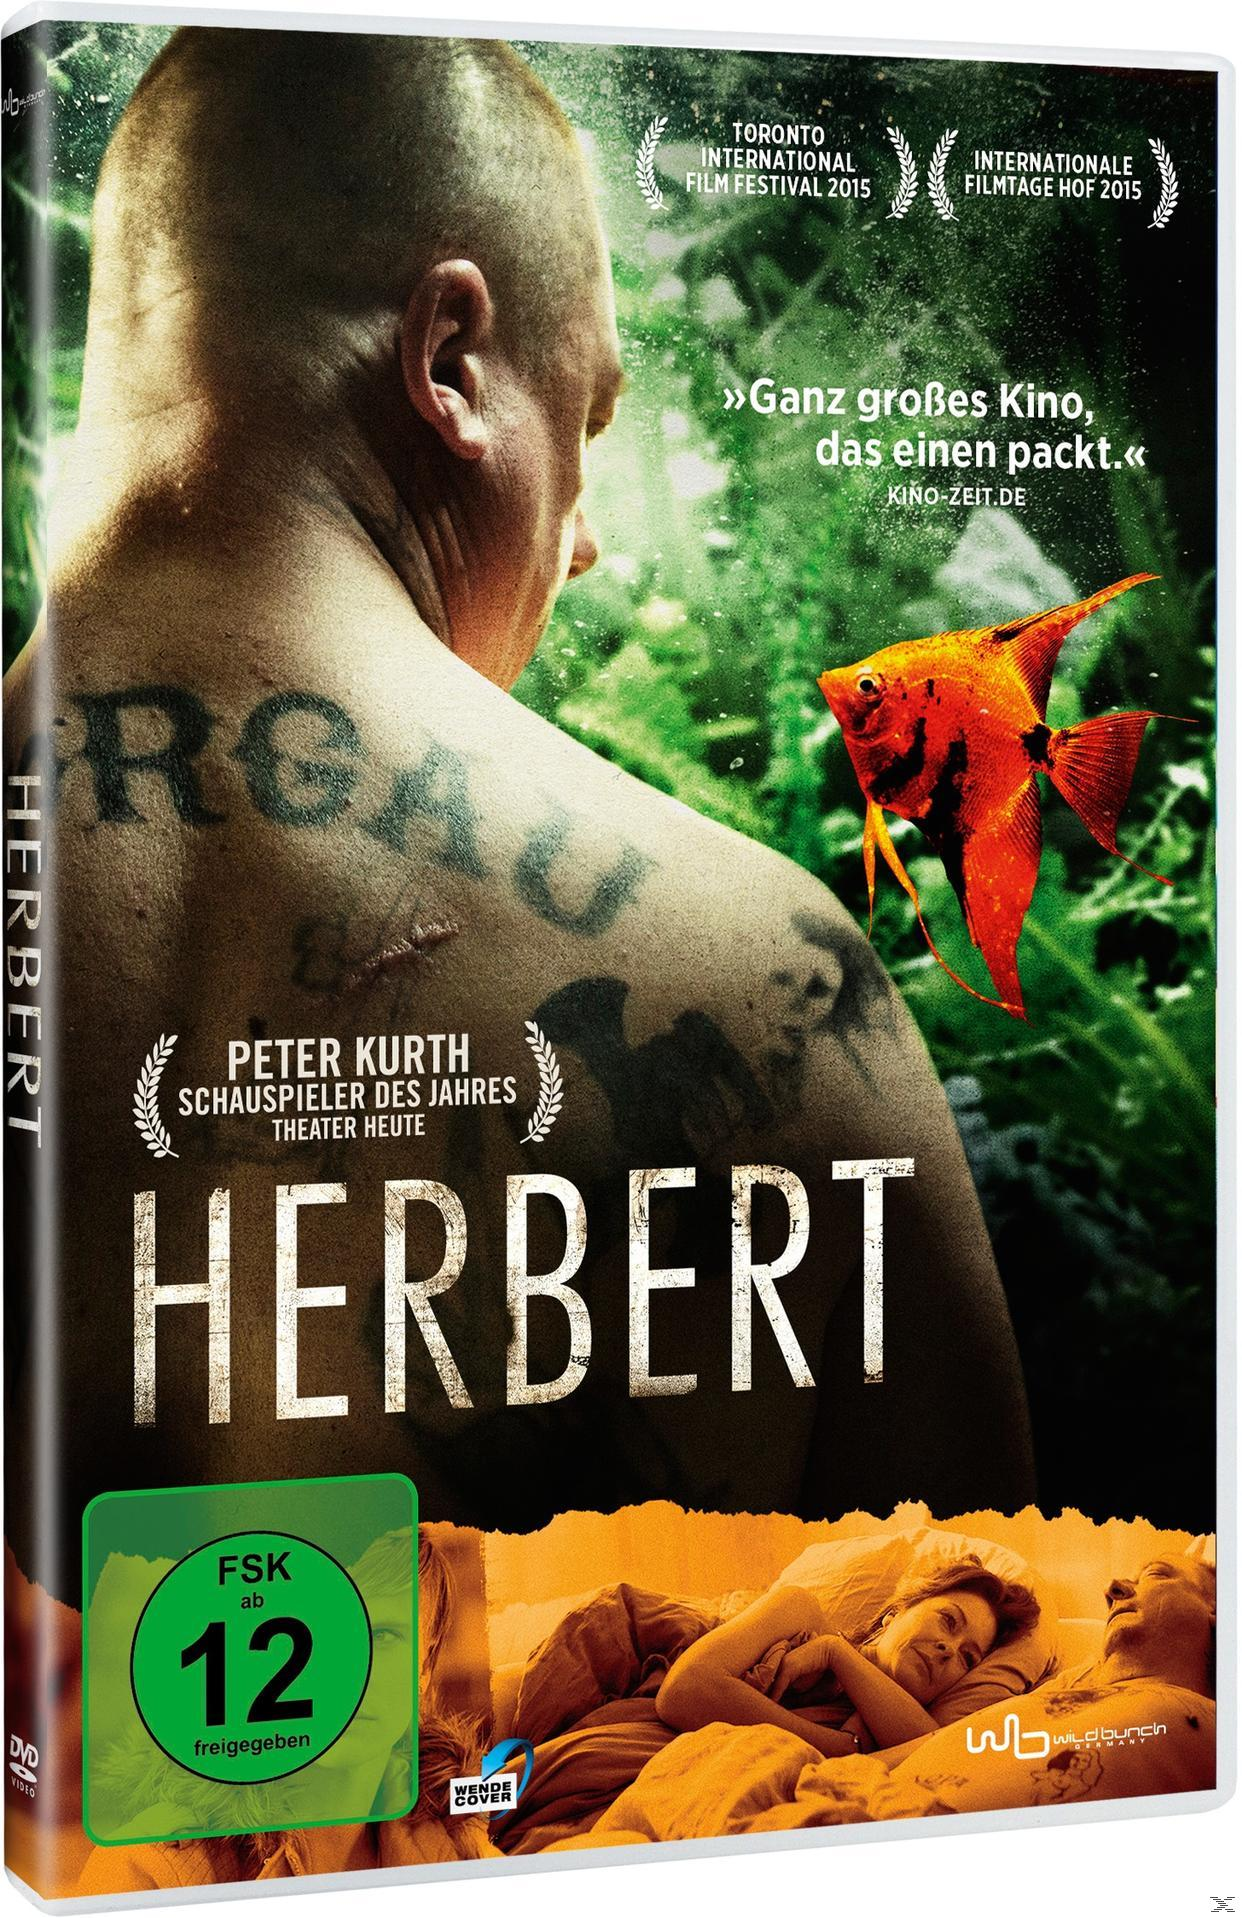 Herbert DVD